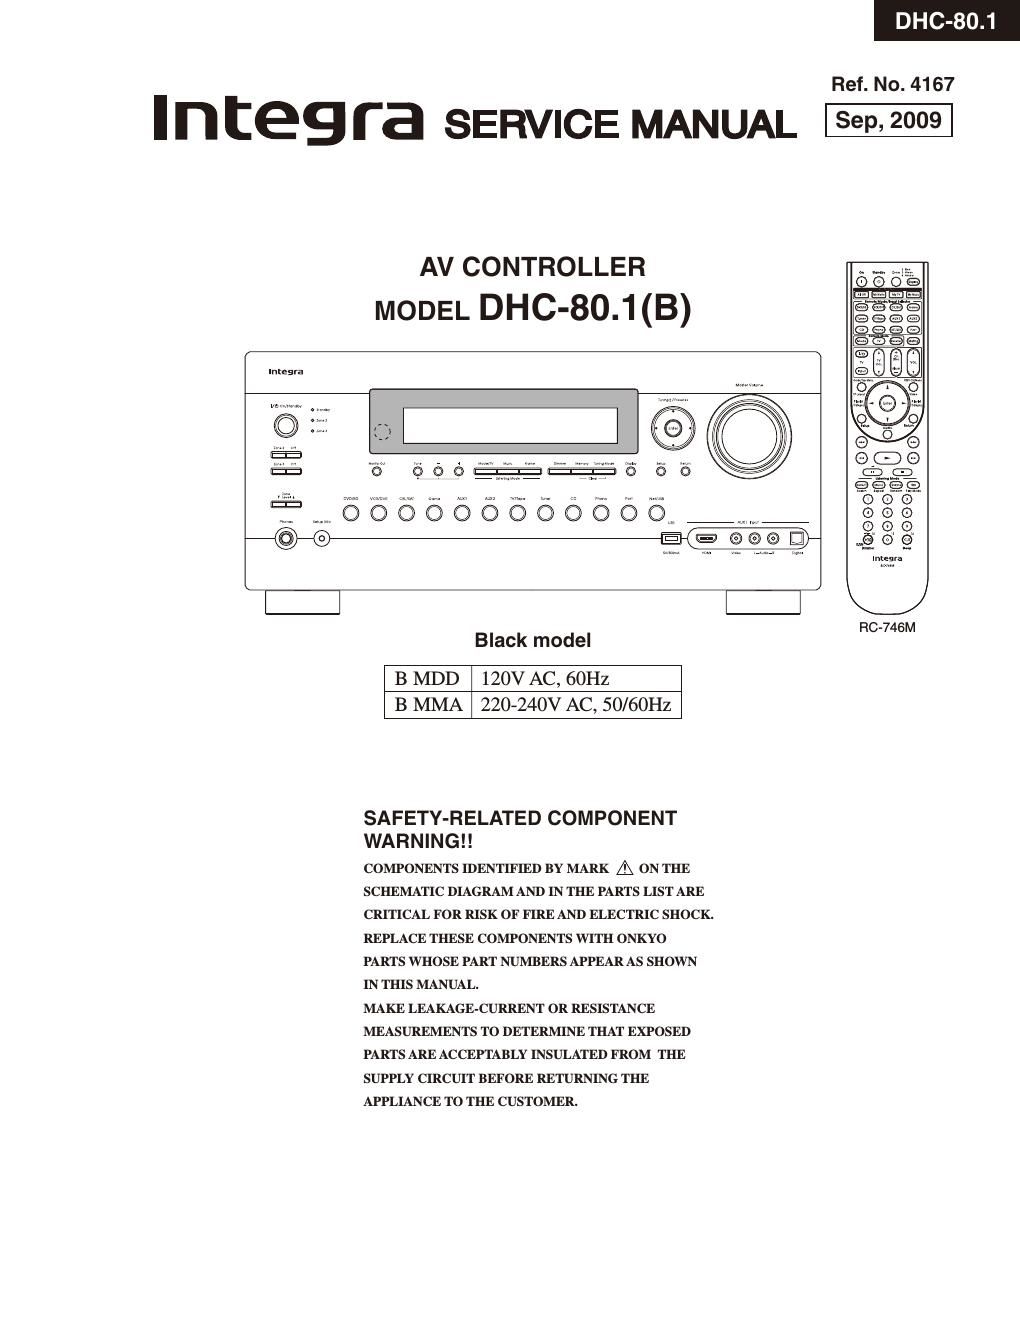 integra dhc 80 1 b service manual